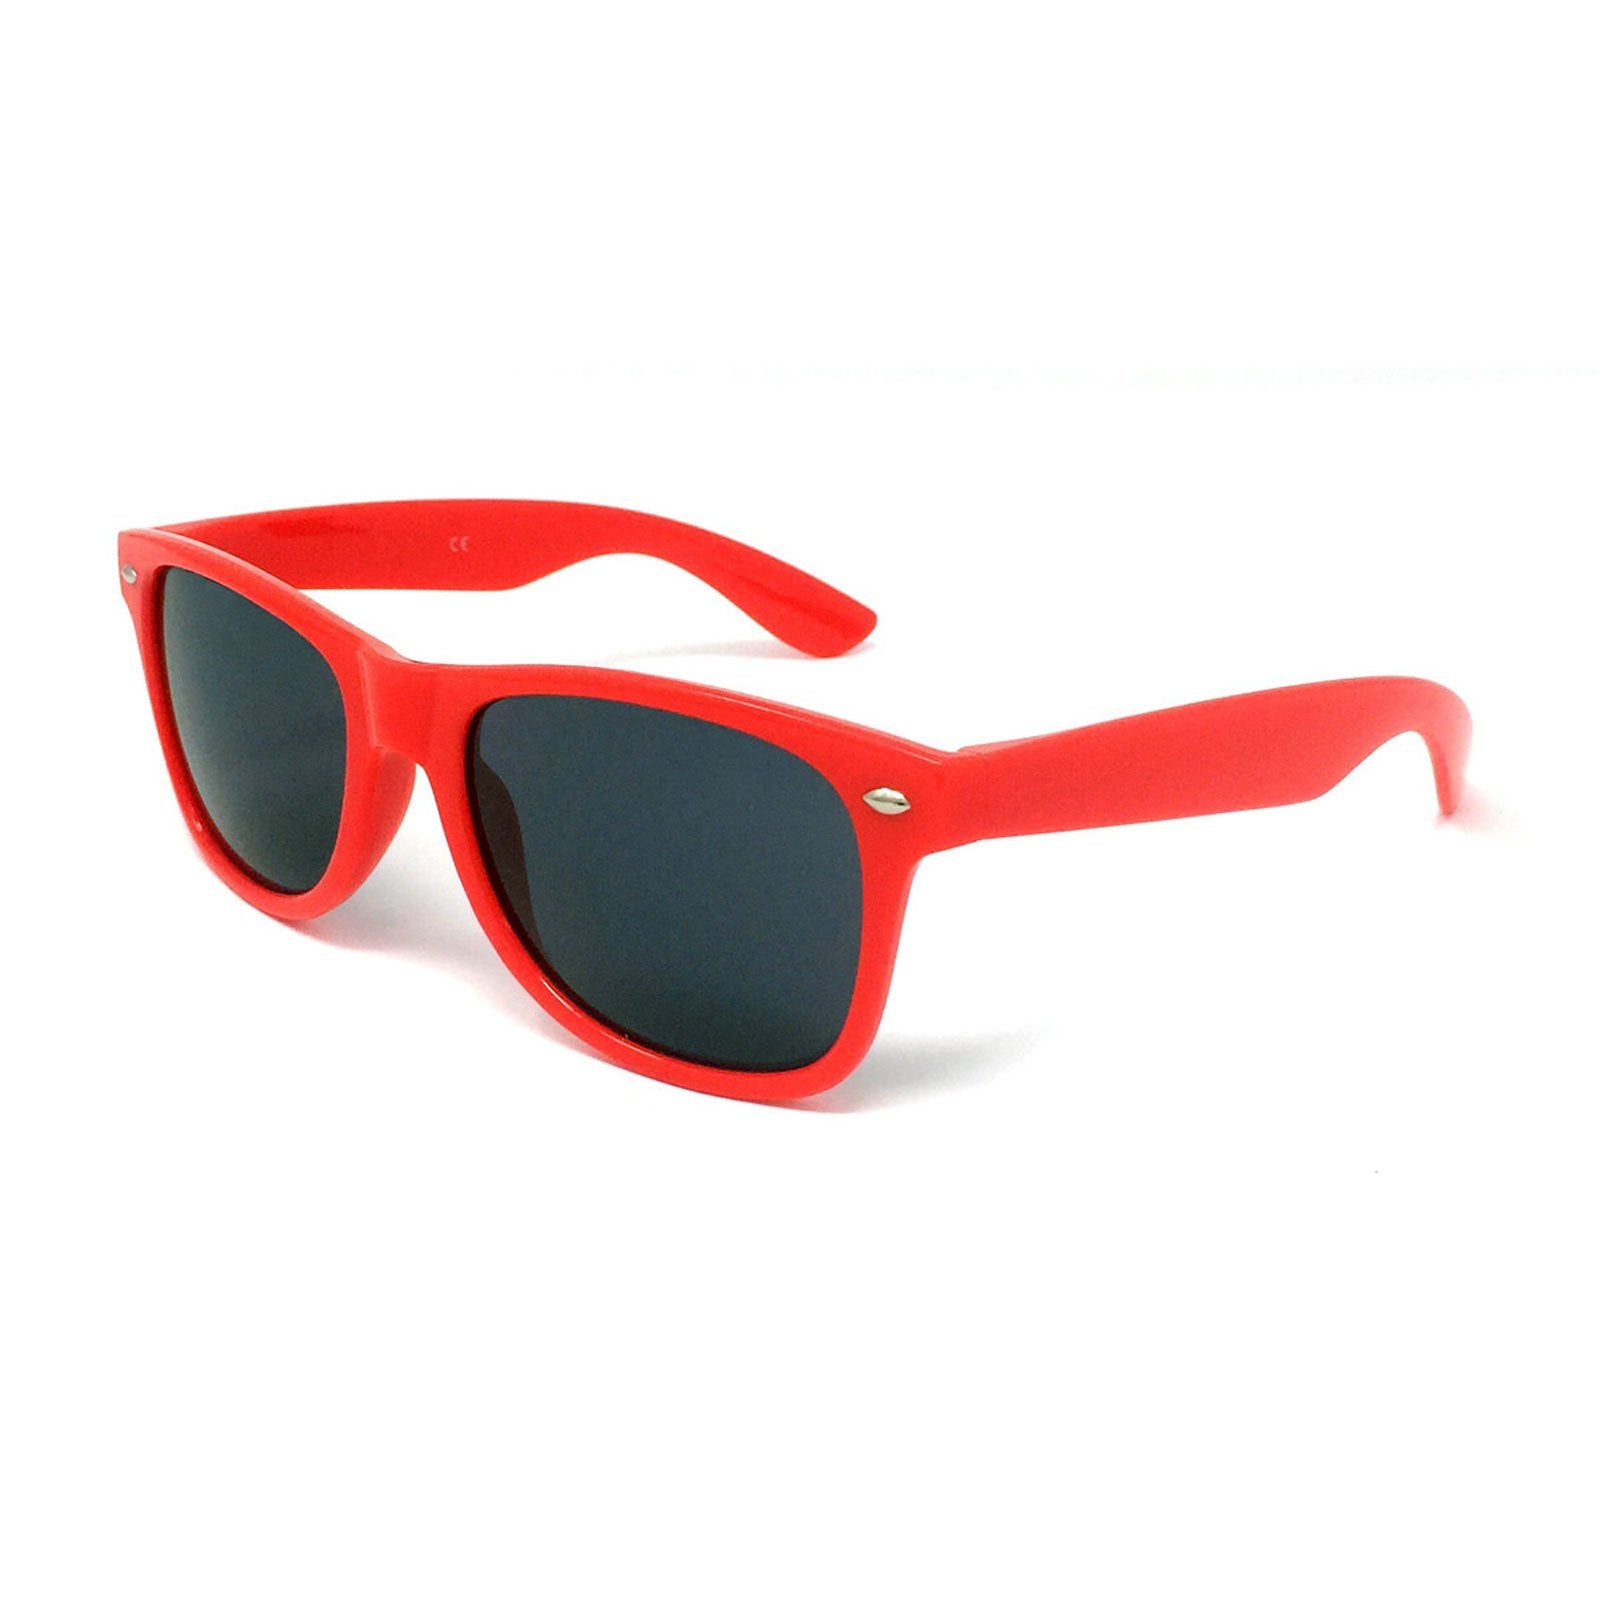 Wholesale Kids Classic Sunglasses - Red Frame, Black Lens